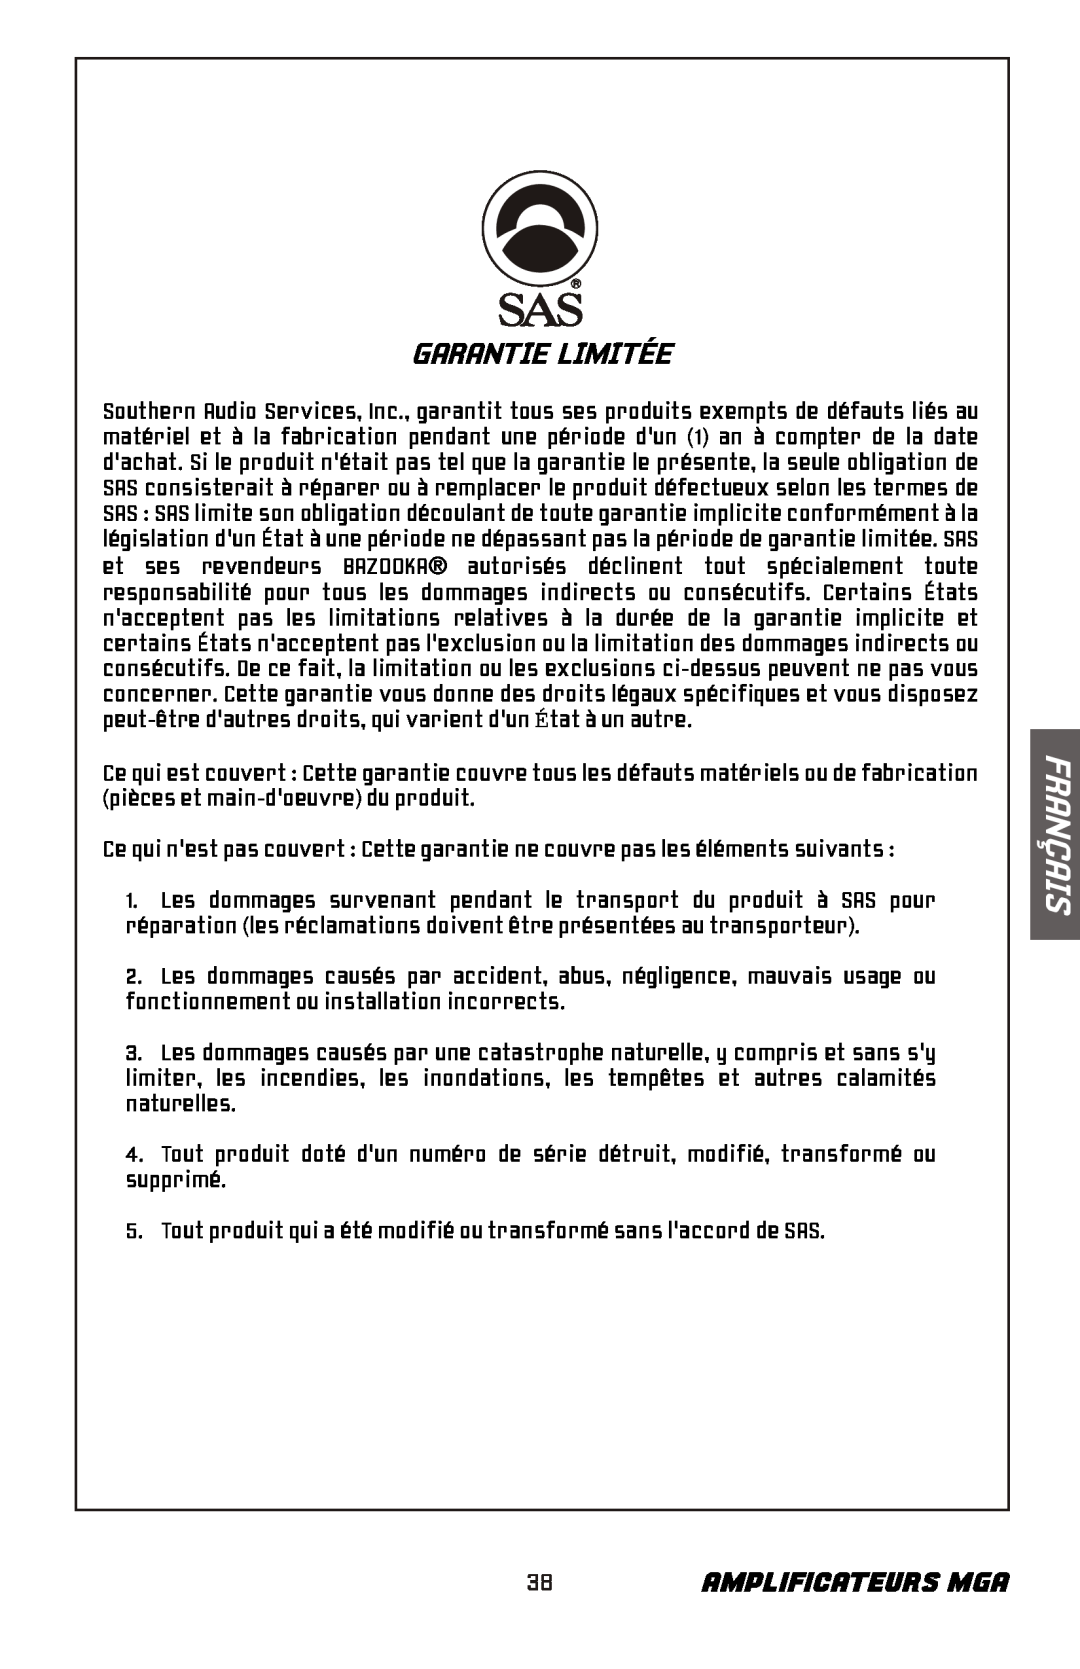 Bazooka MGA11000H, MGA11500H manual Garantie Limitée, 38AMPLIFICATEURS MGA, Français 